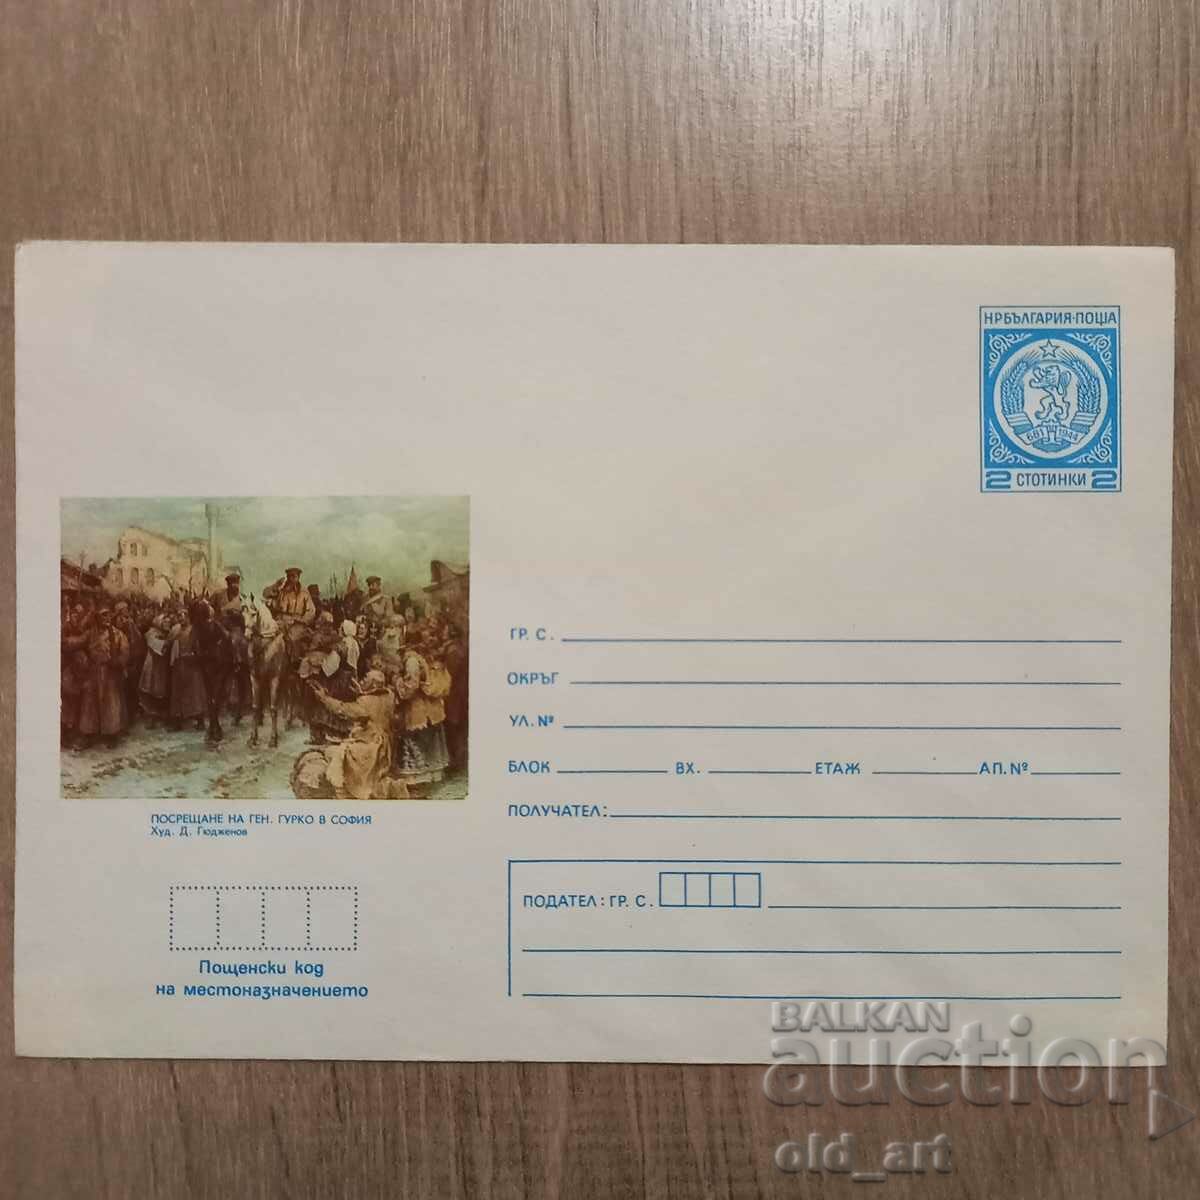 Postal envelope - The welcome of gen. Gurko in Sofia